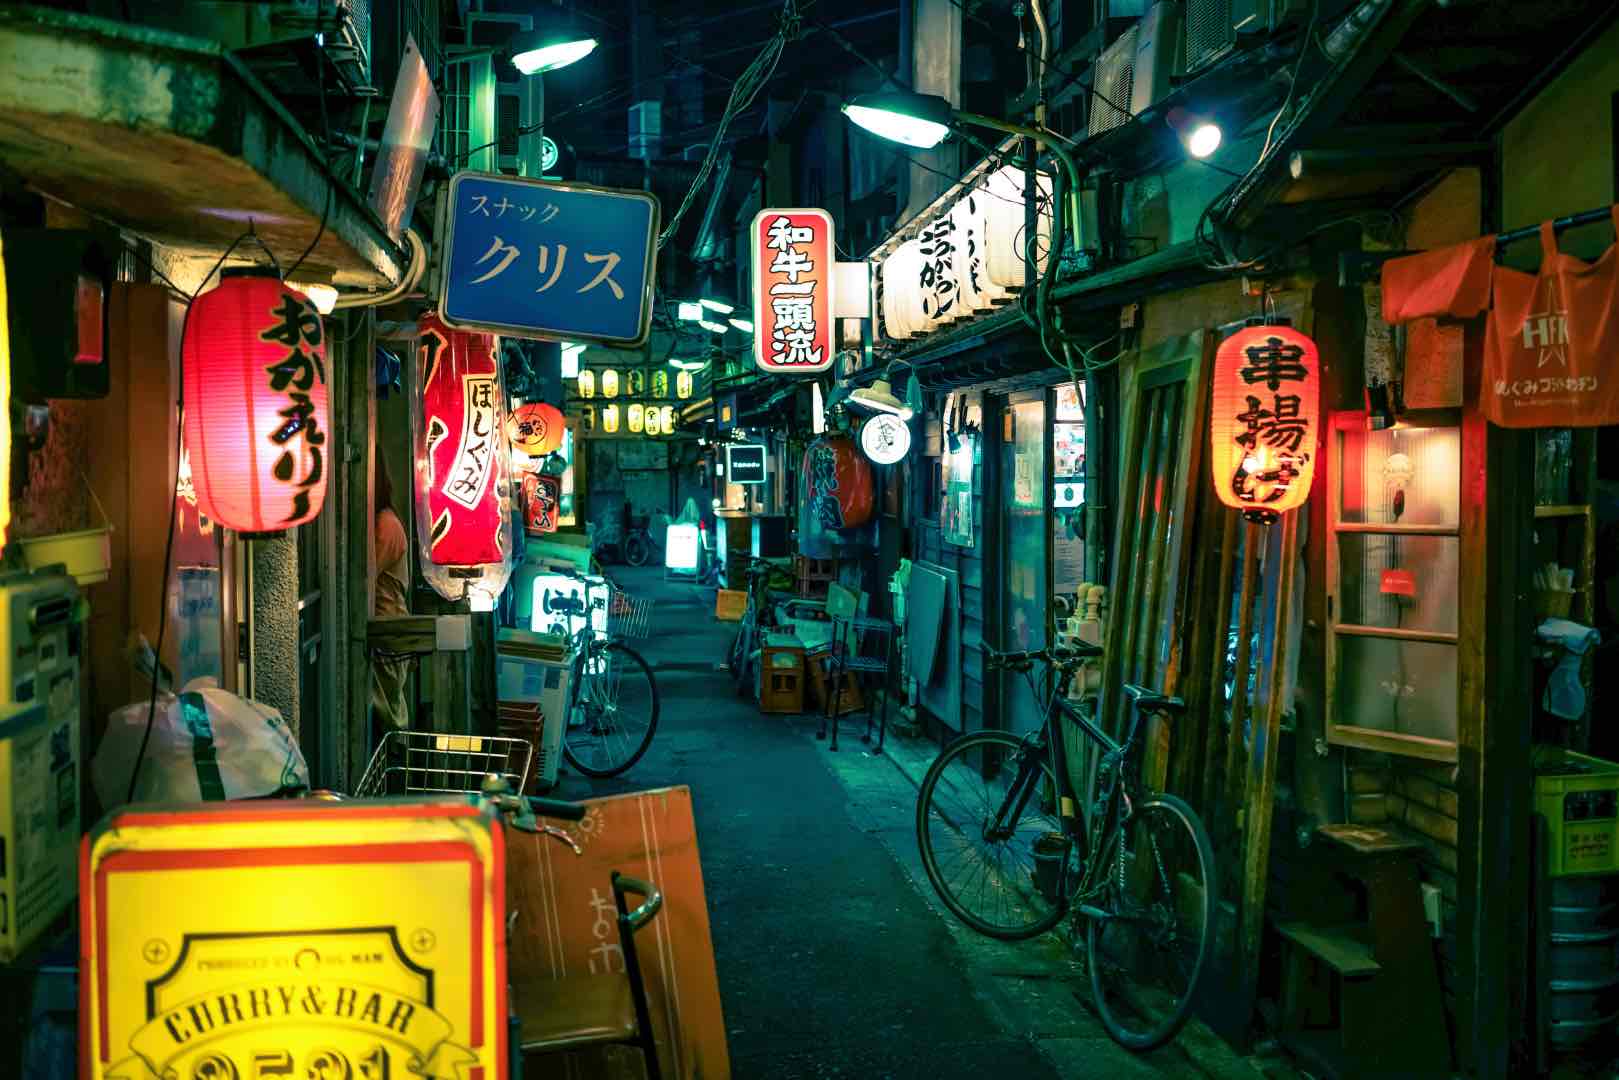 Wandering through the small back alleys of Sangenjaya, Tokyo